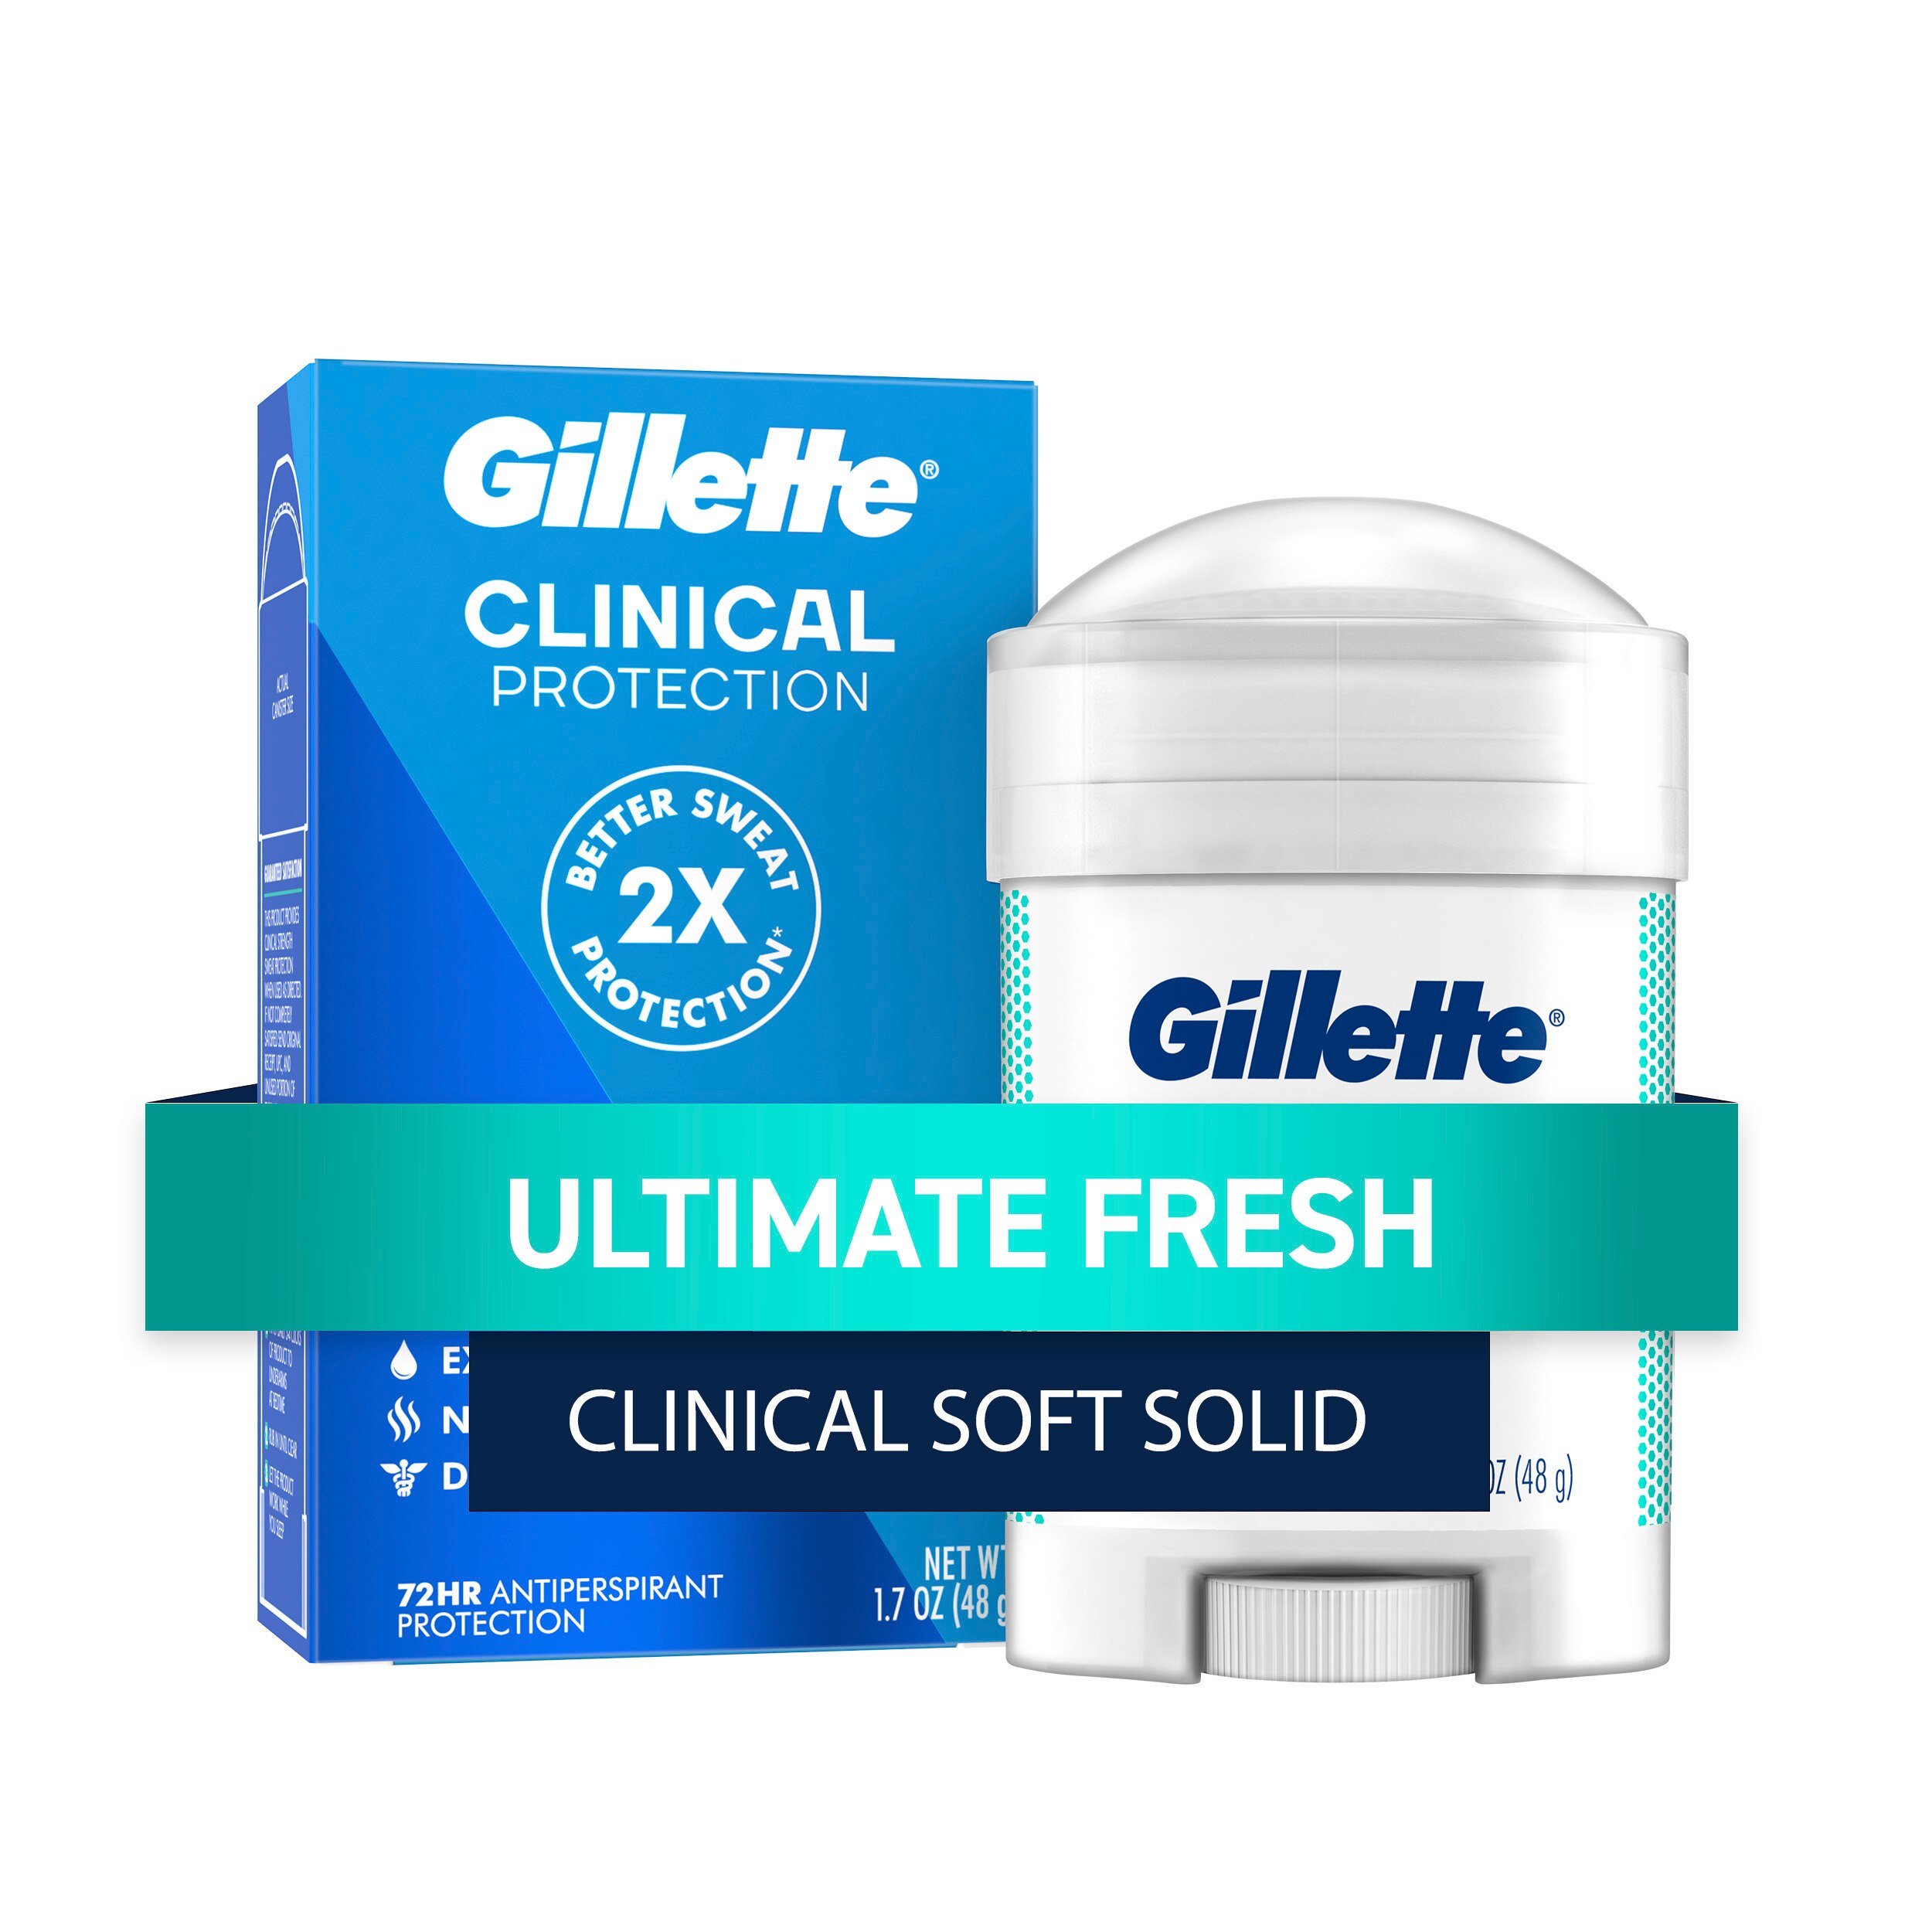 Gillette Clinical Protection 72-Hour Antiperspirant & Deodorant Stick, Ultimate Fresh, 1.7 OZ